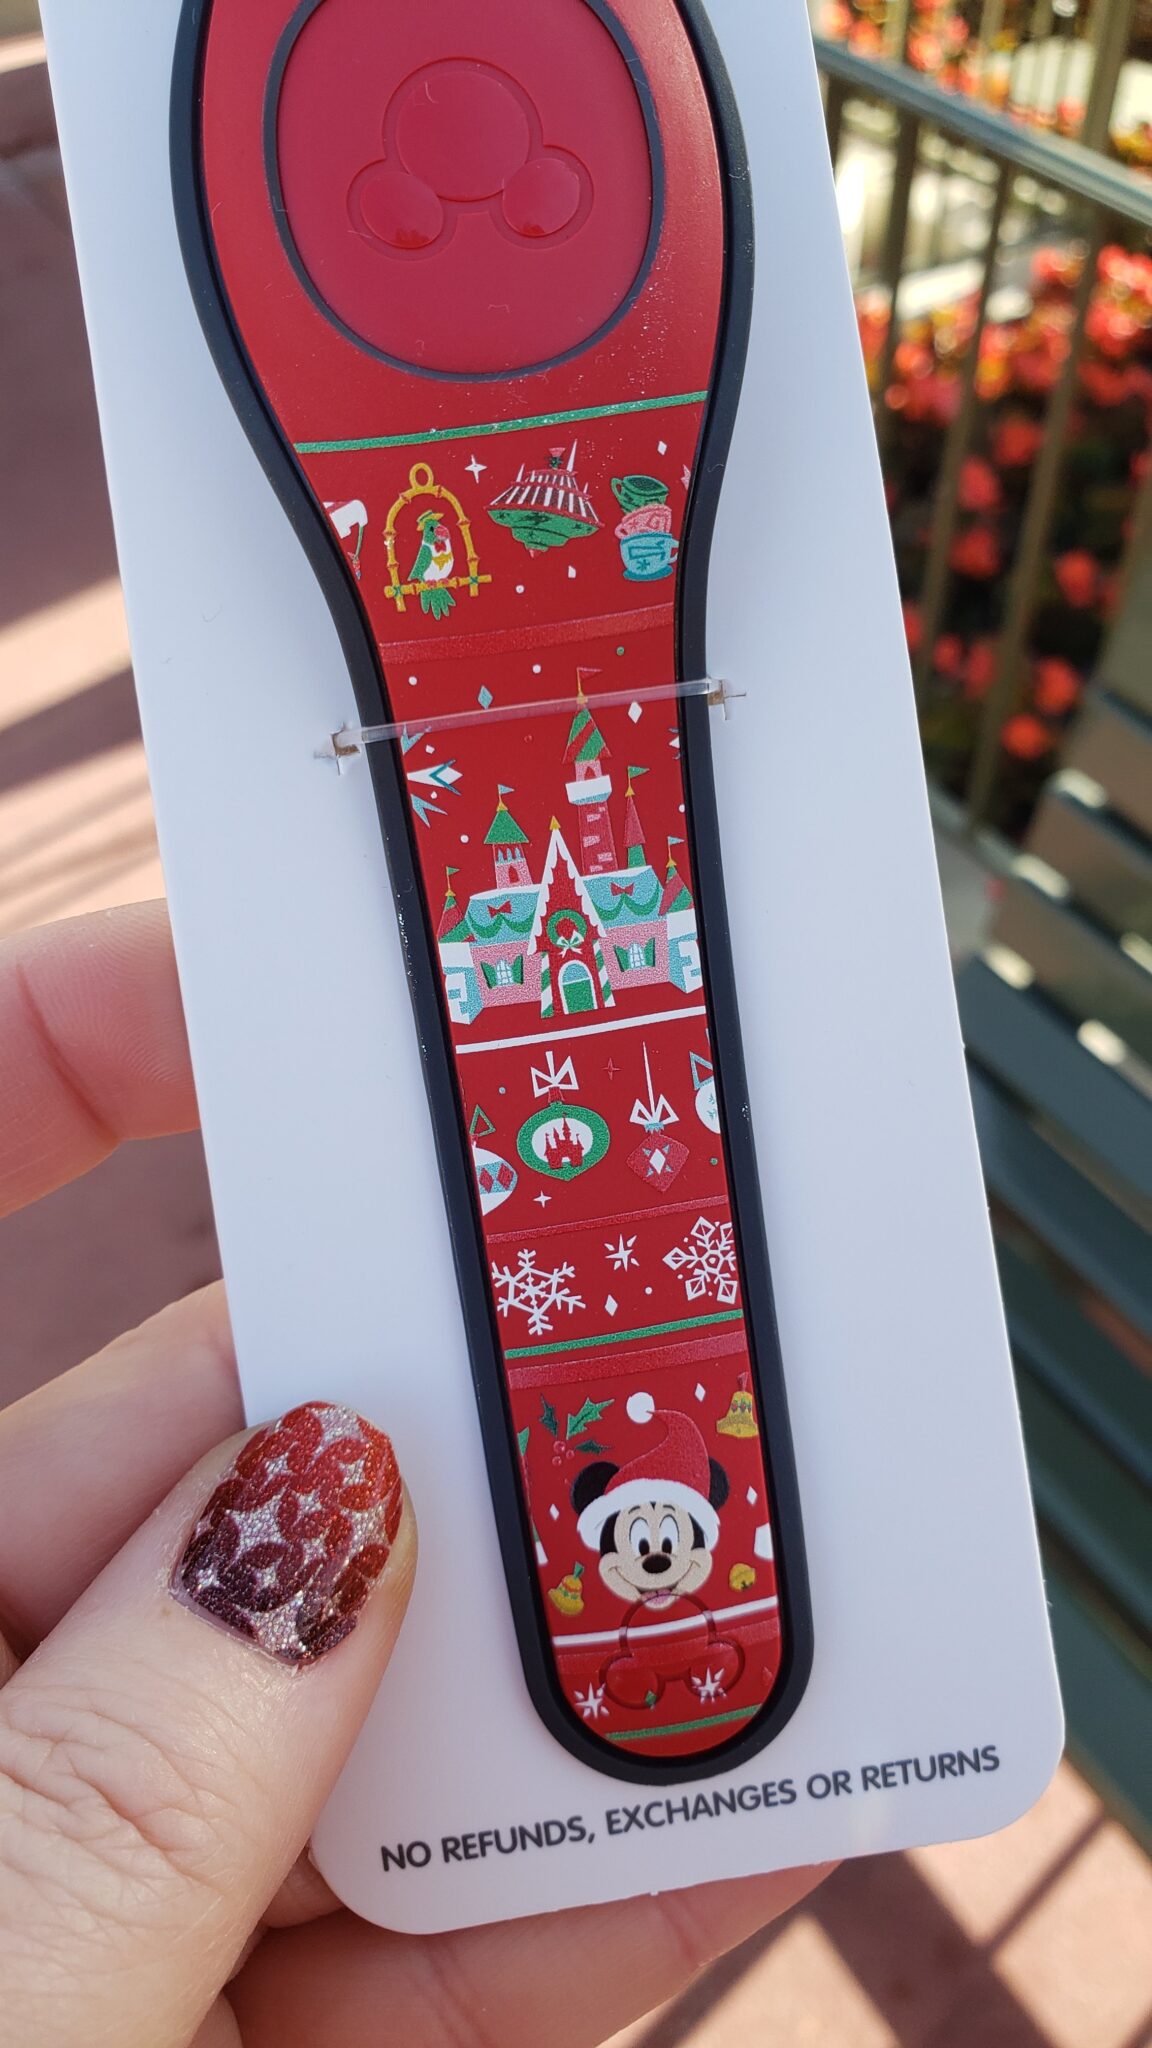 Festive Christmas MagicBand Arrives at Disney World!